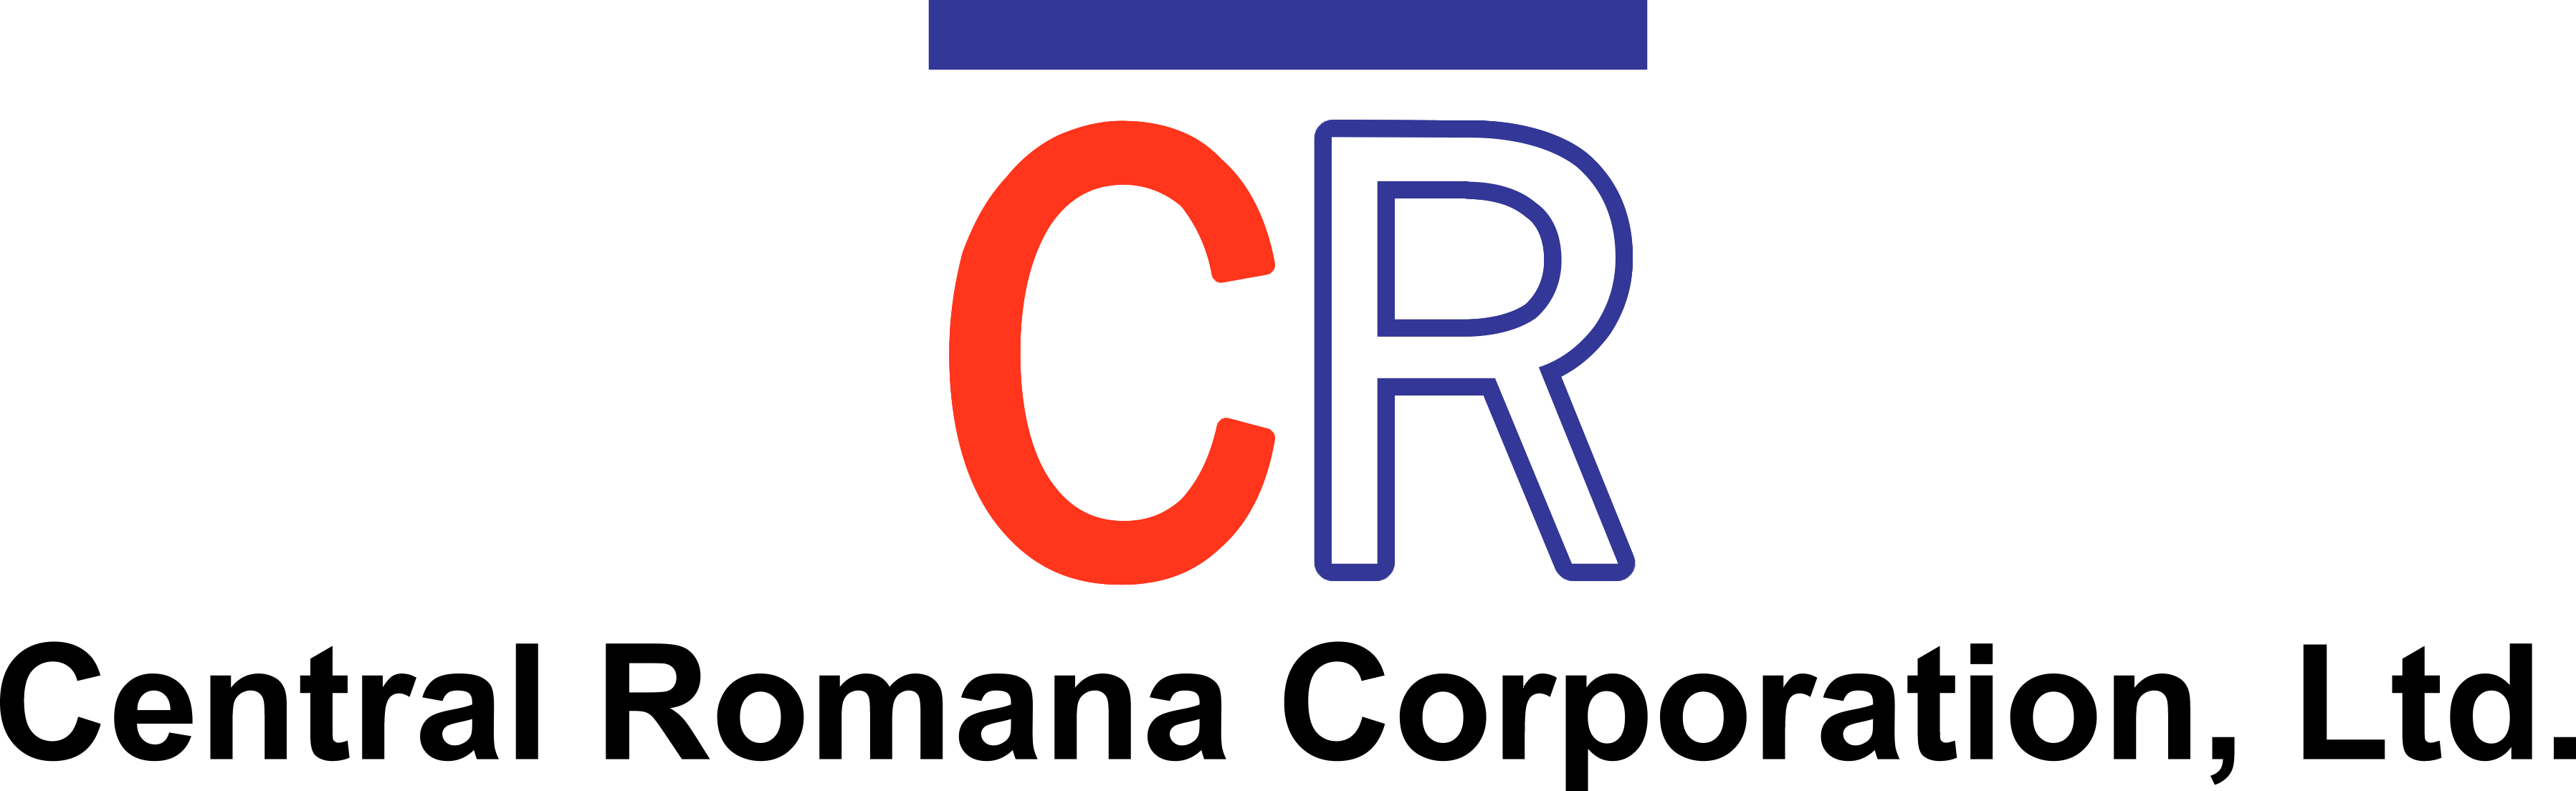 Central-Romana-Corporation-Ltd